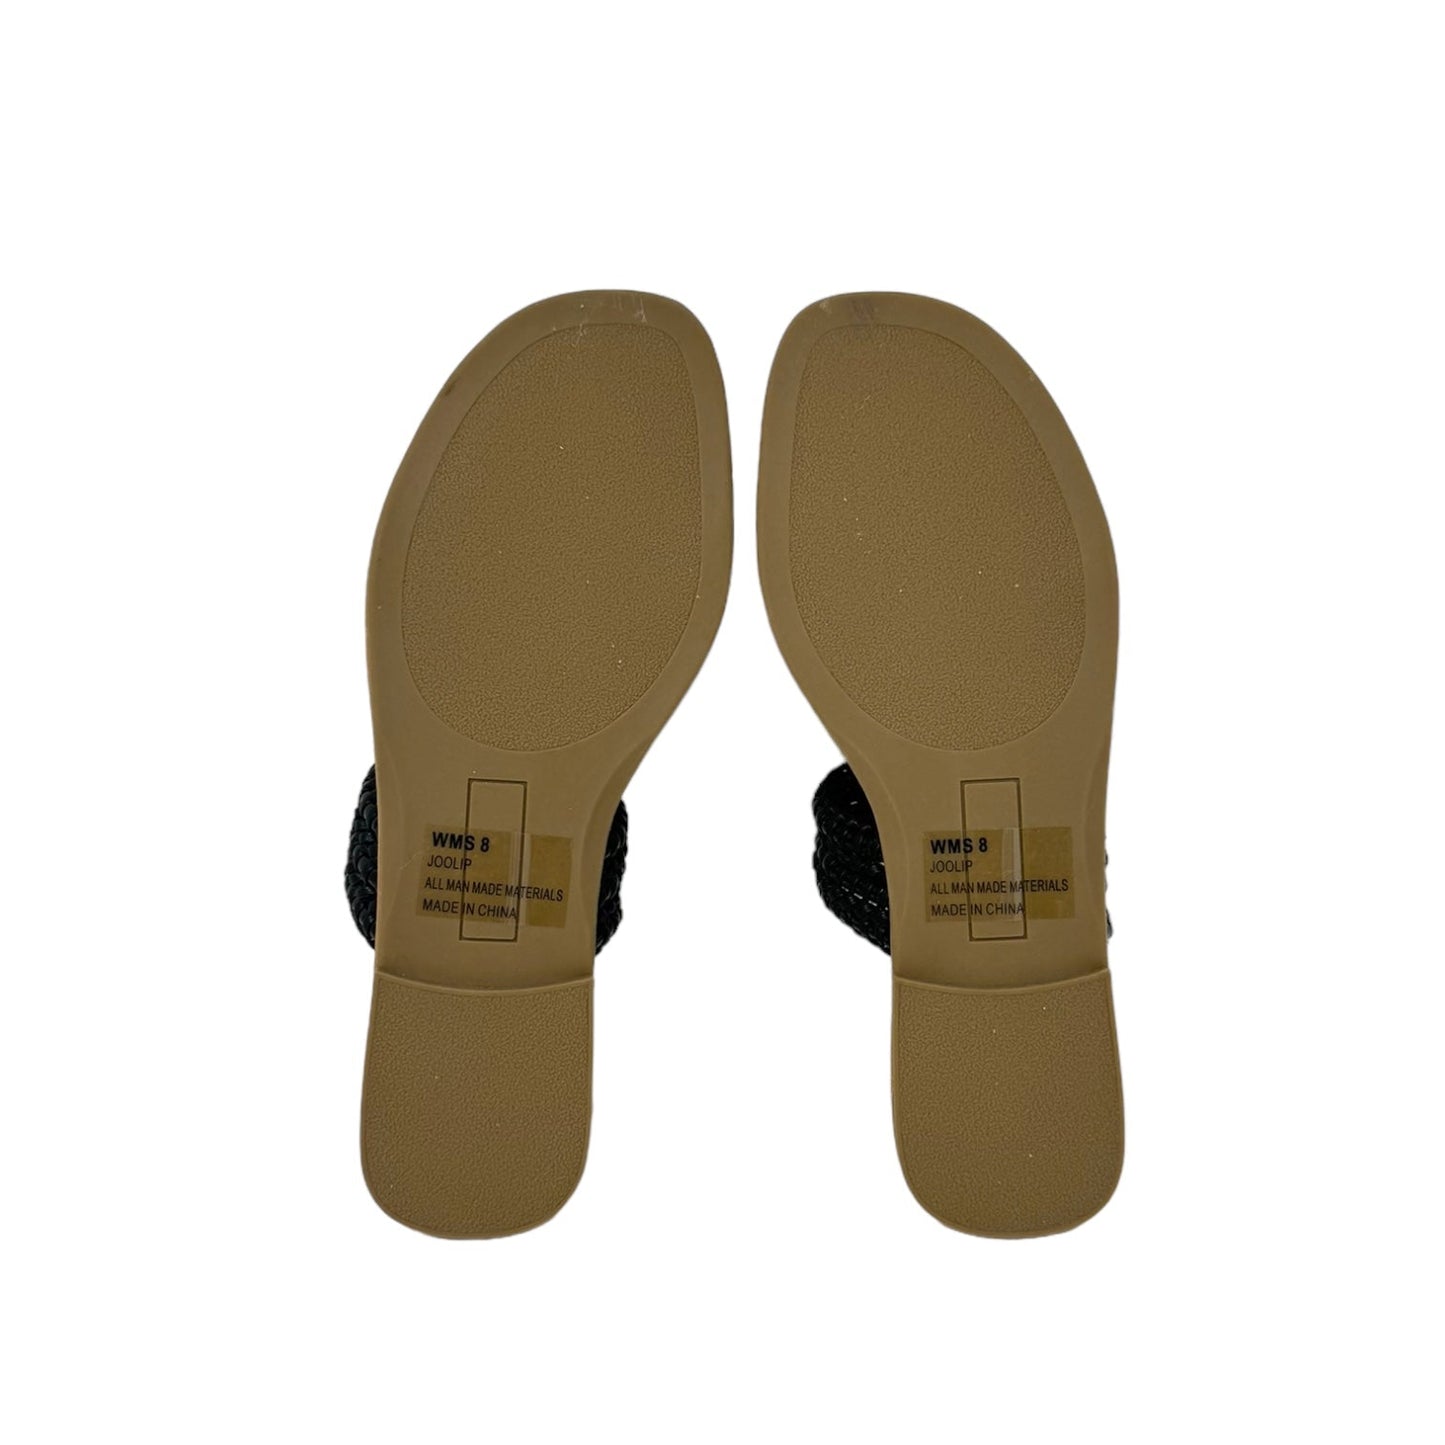 Joolip Woven Slide Sandals Dolce Vita, Size 8